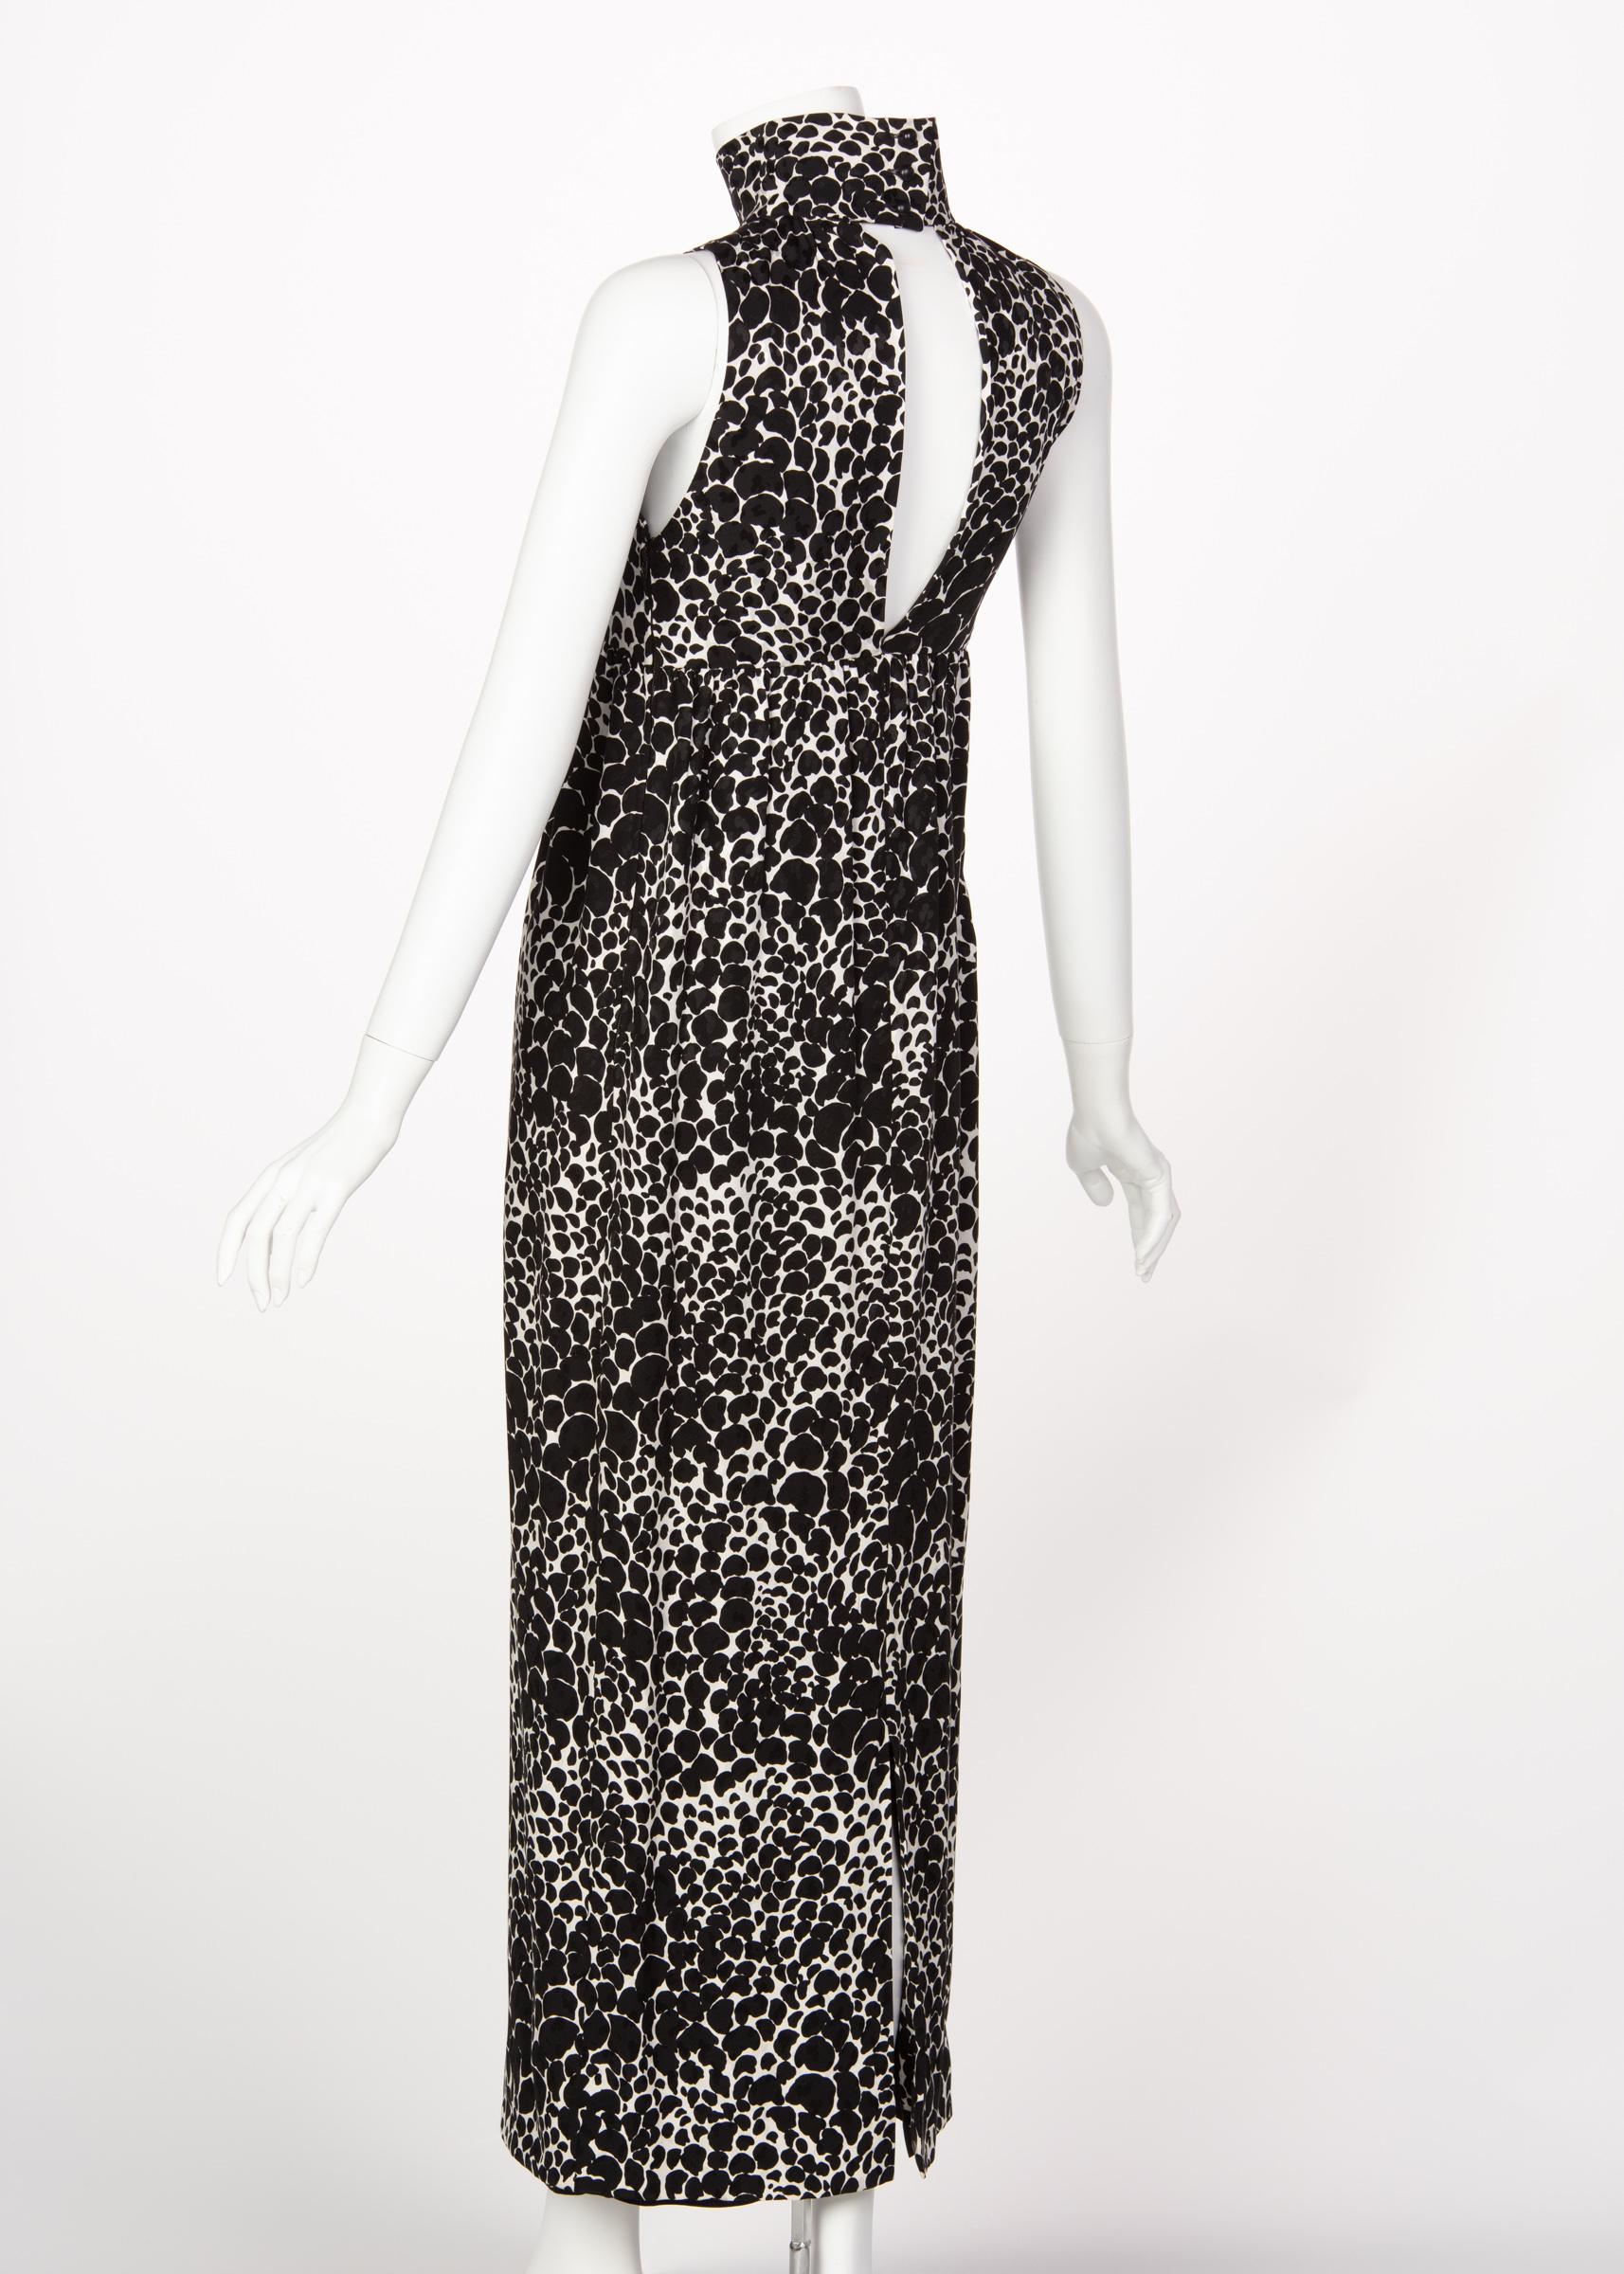 Women's Yves Saint Laurent YSL Black and White Silk Print High Neck Evening Dress, 1985